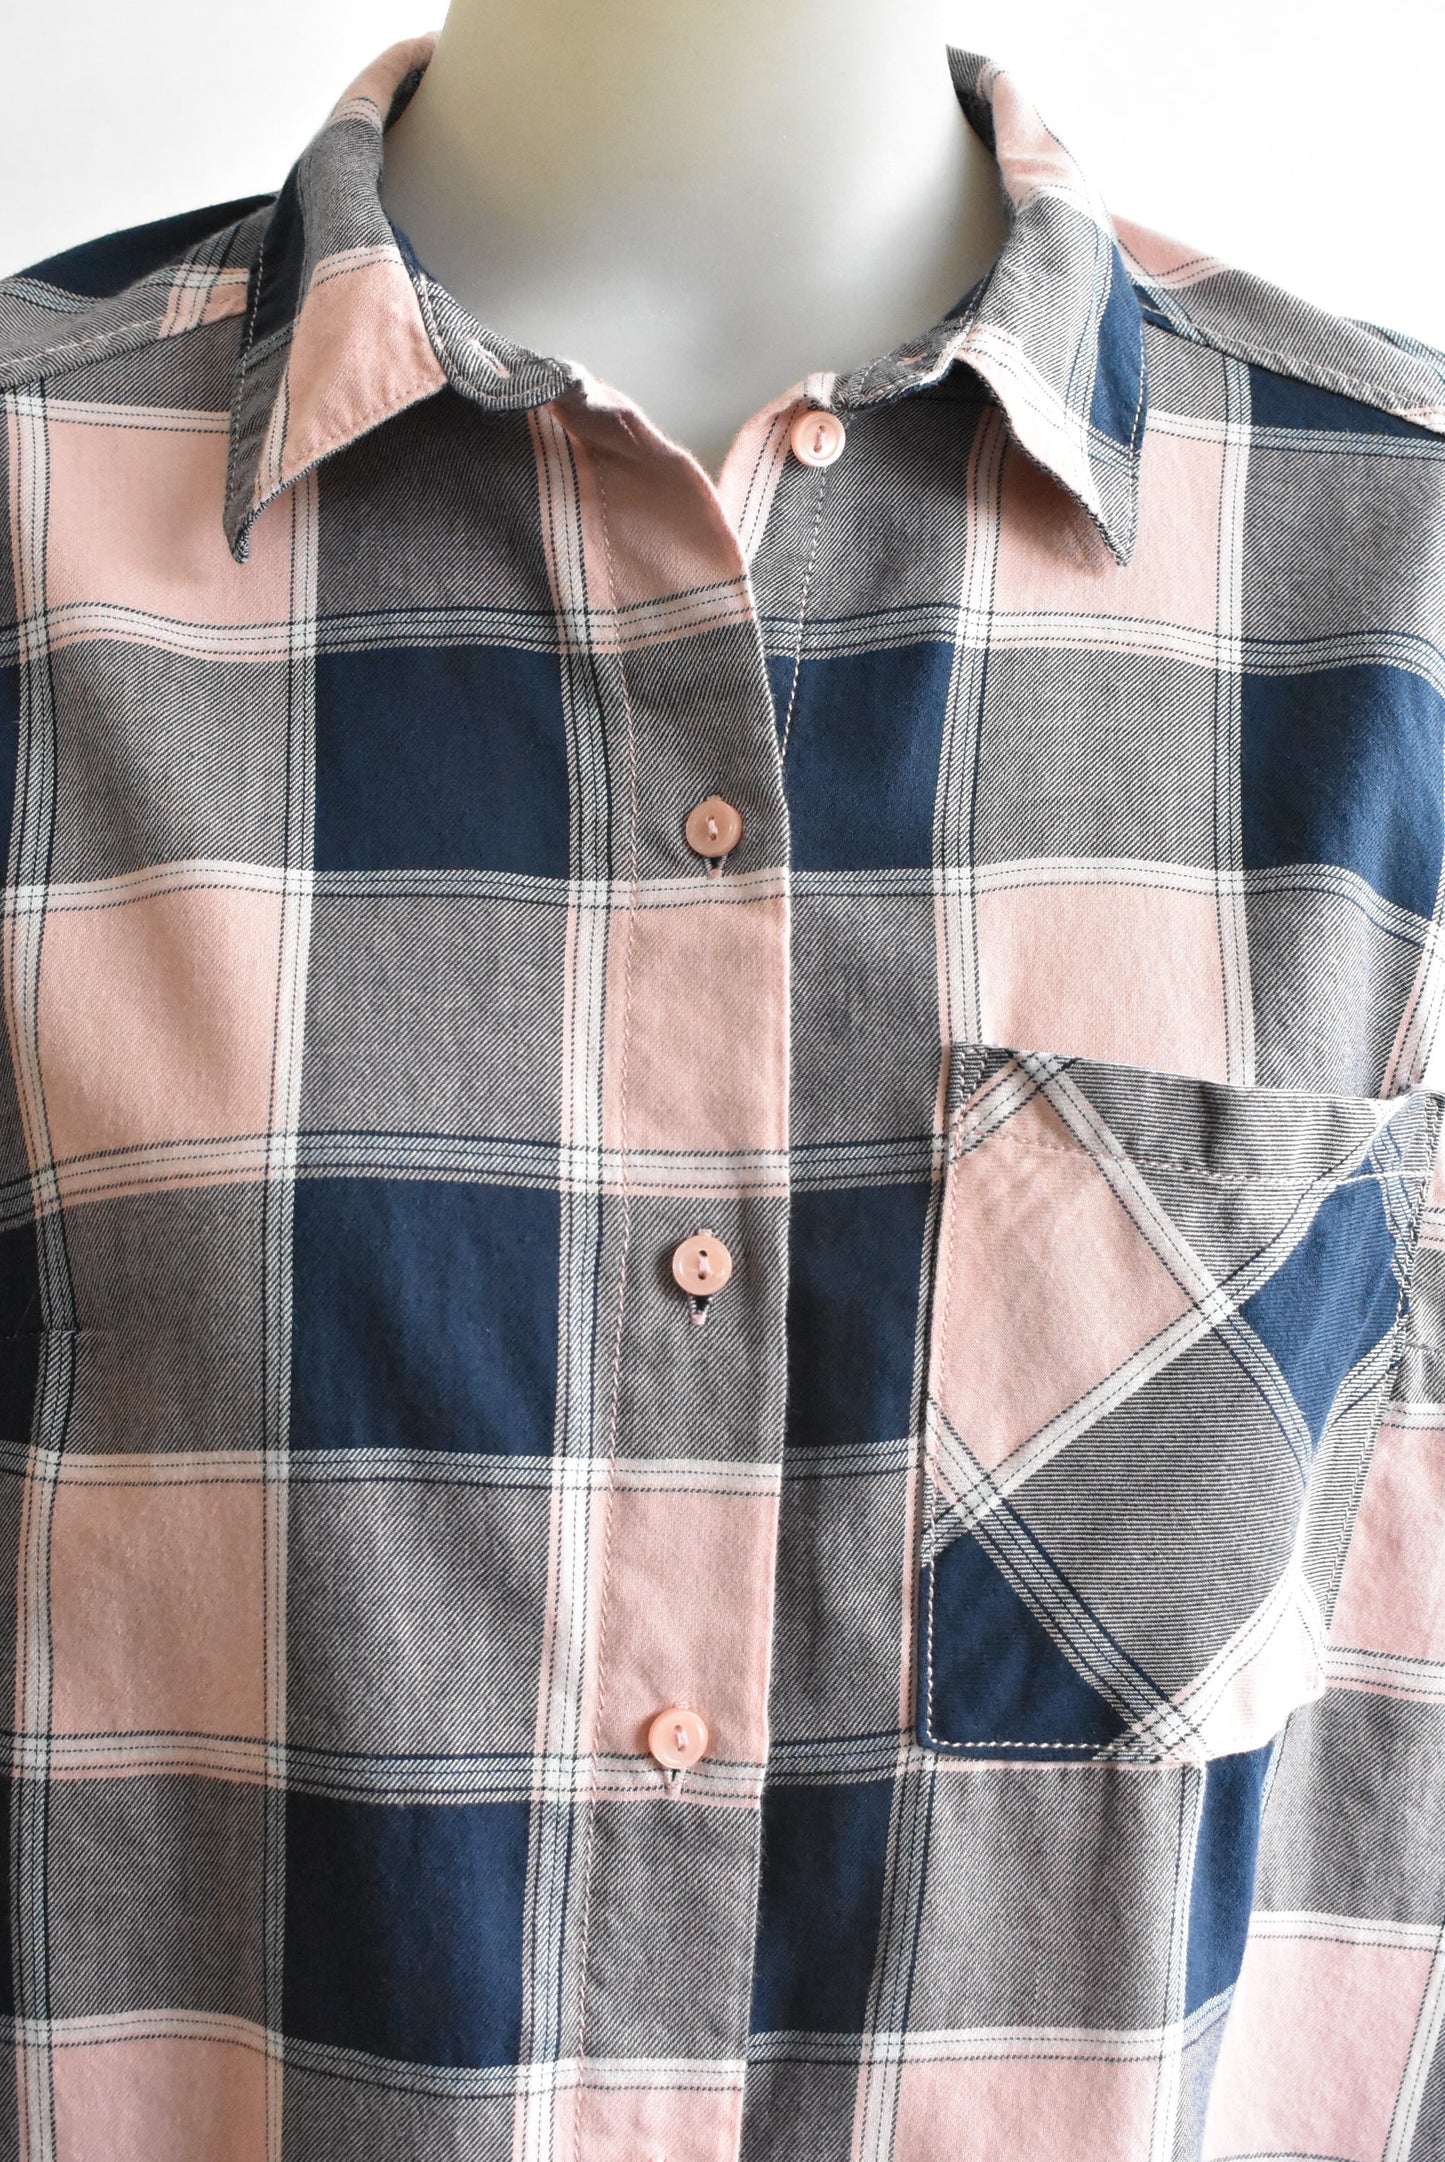 H&M navy & blush pink 100% cotton plaid shirt, size S